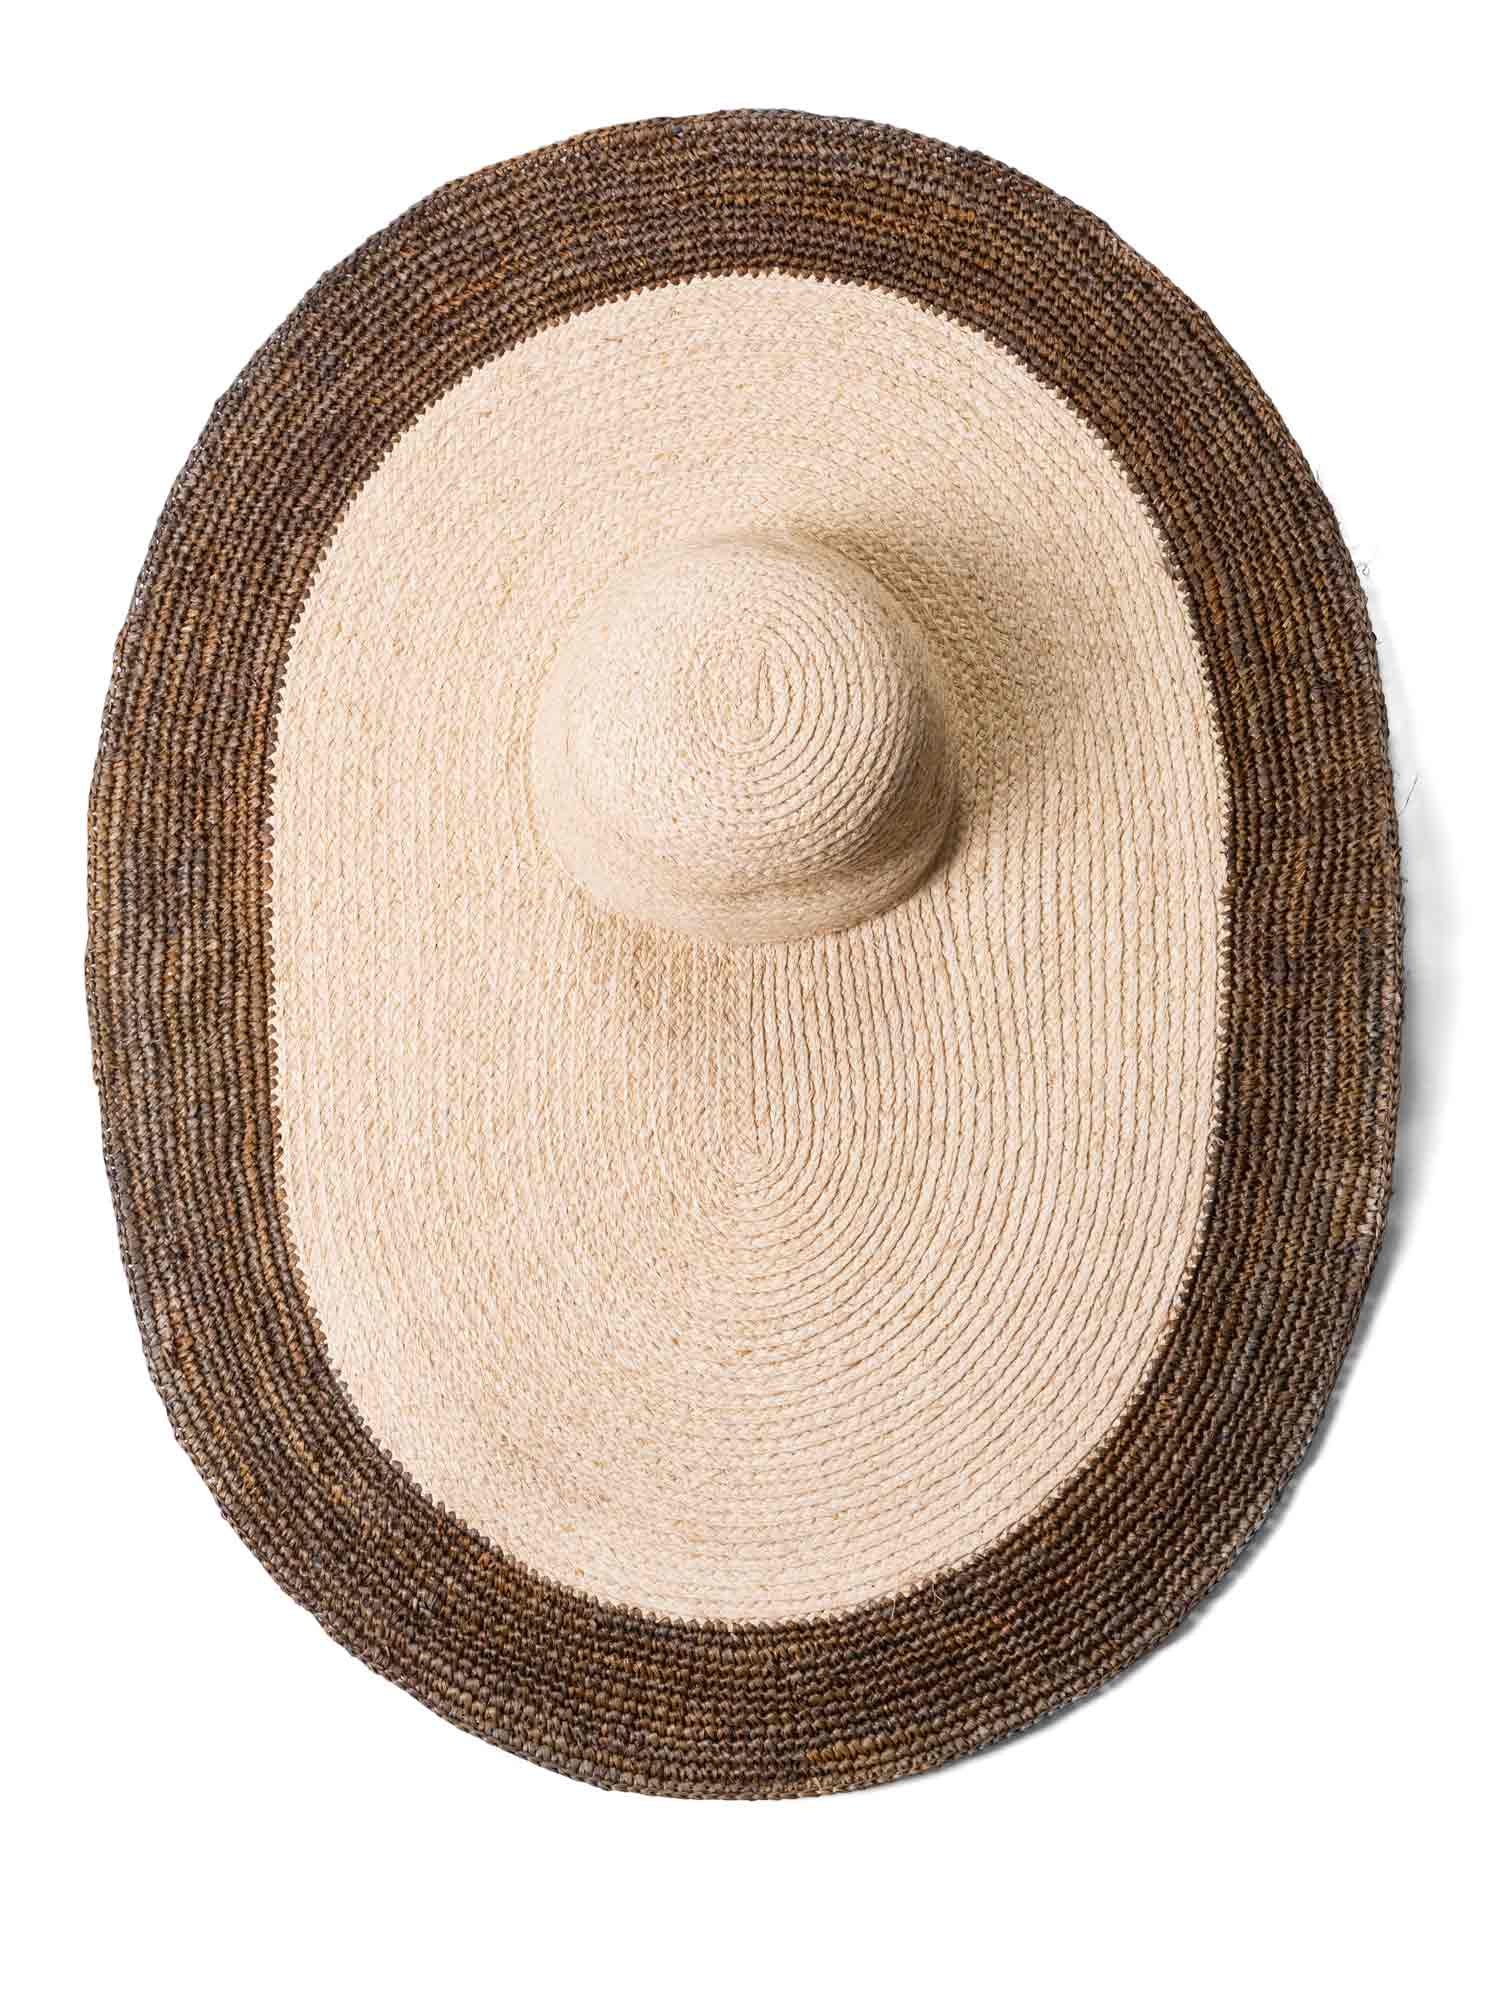 CODO Natural Woven Gigantic Straw Sun Hat